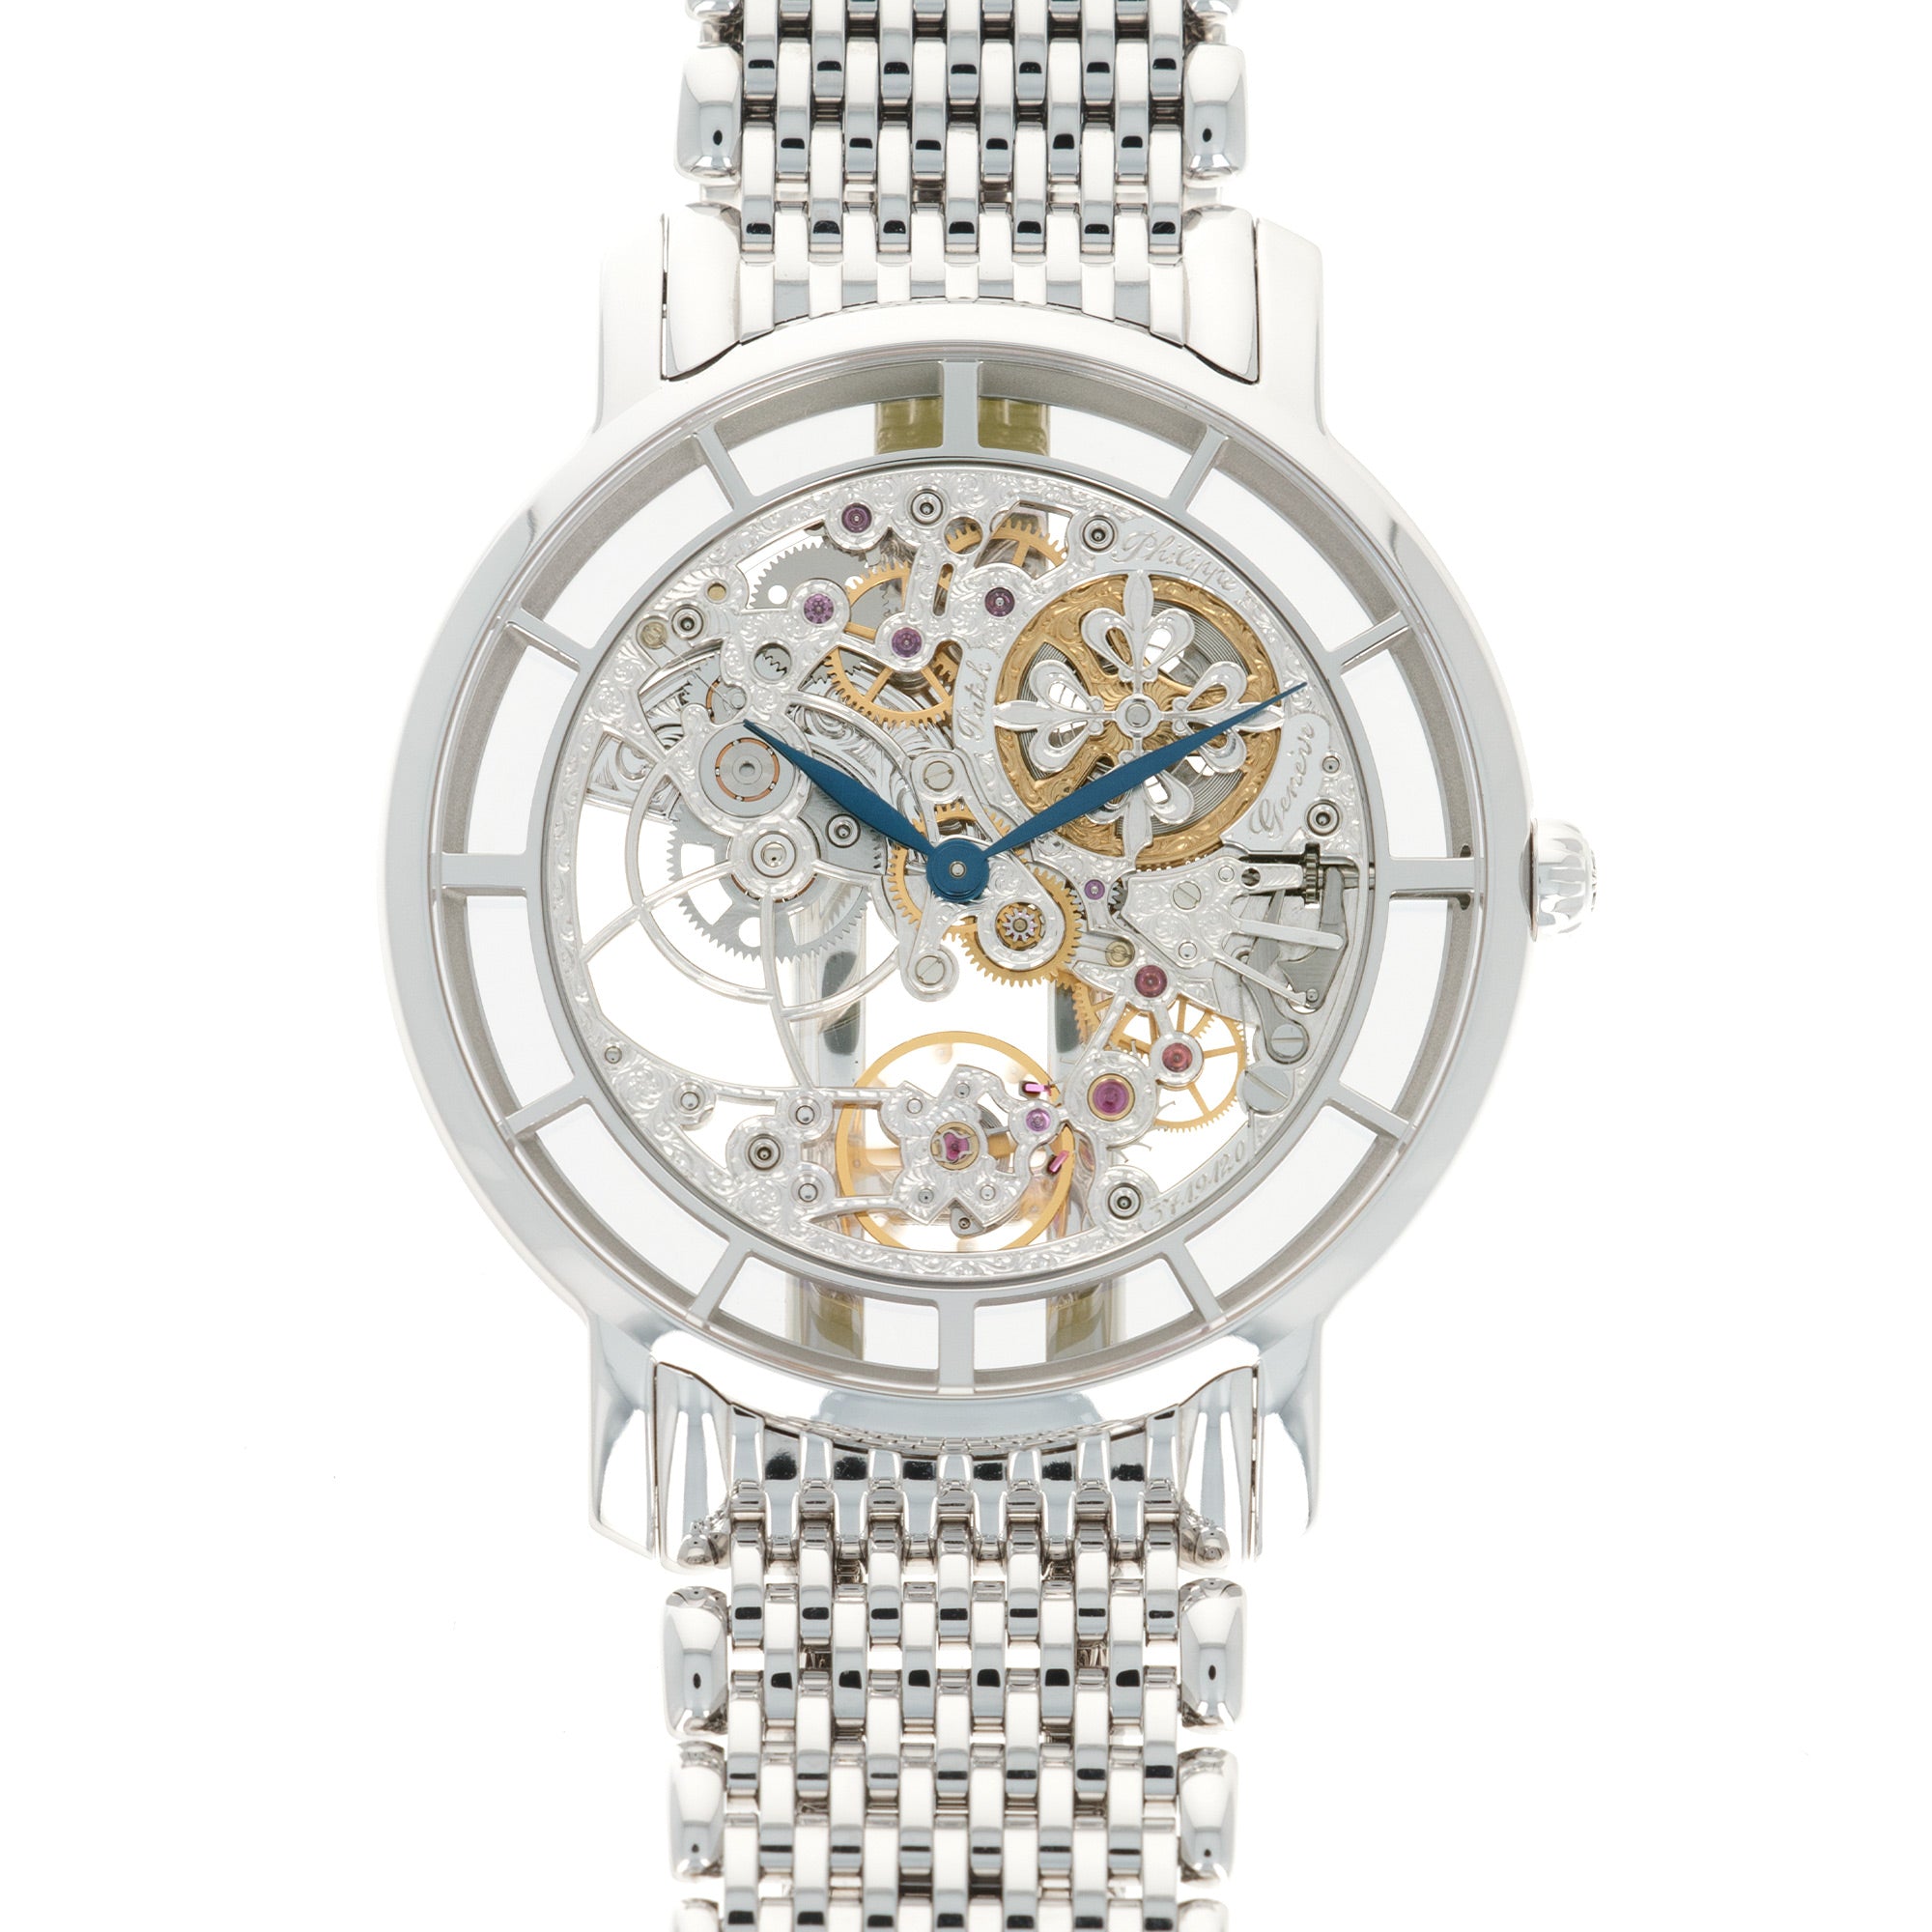 Patek Philippe - Patek Philippe White Gold Skeletonized Ultra-Thin Watch Ref. 5180/1G - The Keystone Watches